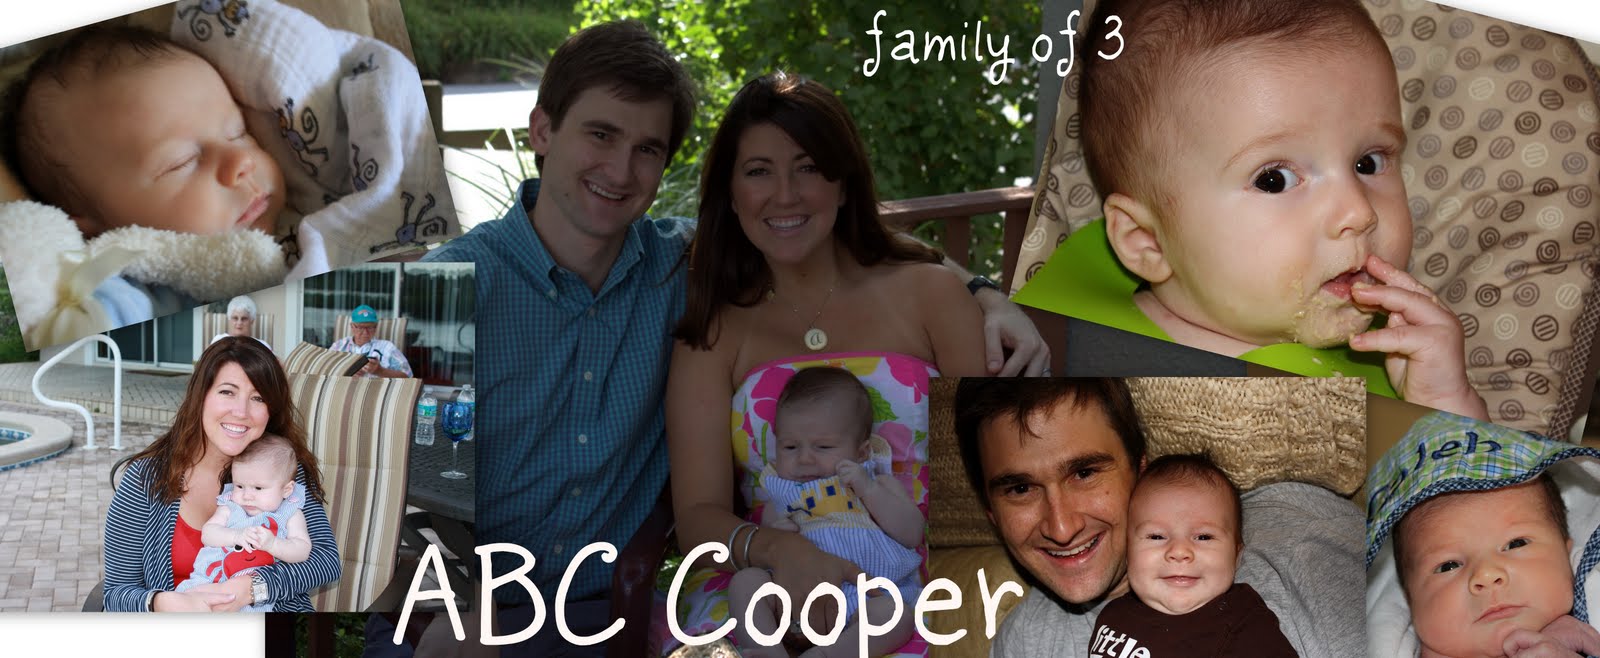 ABC Coopers